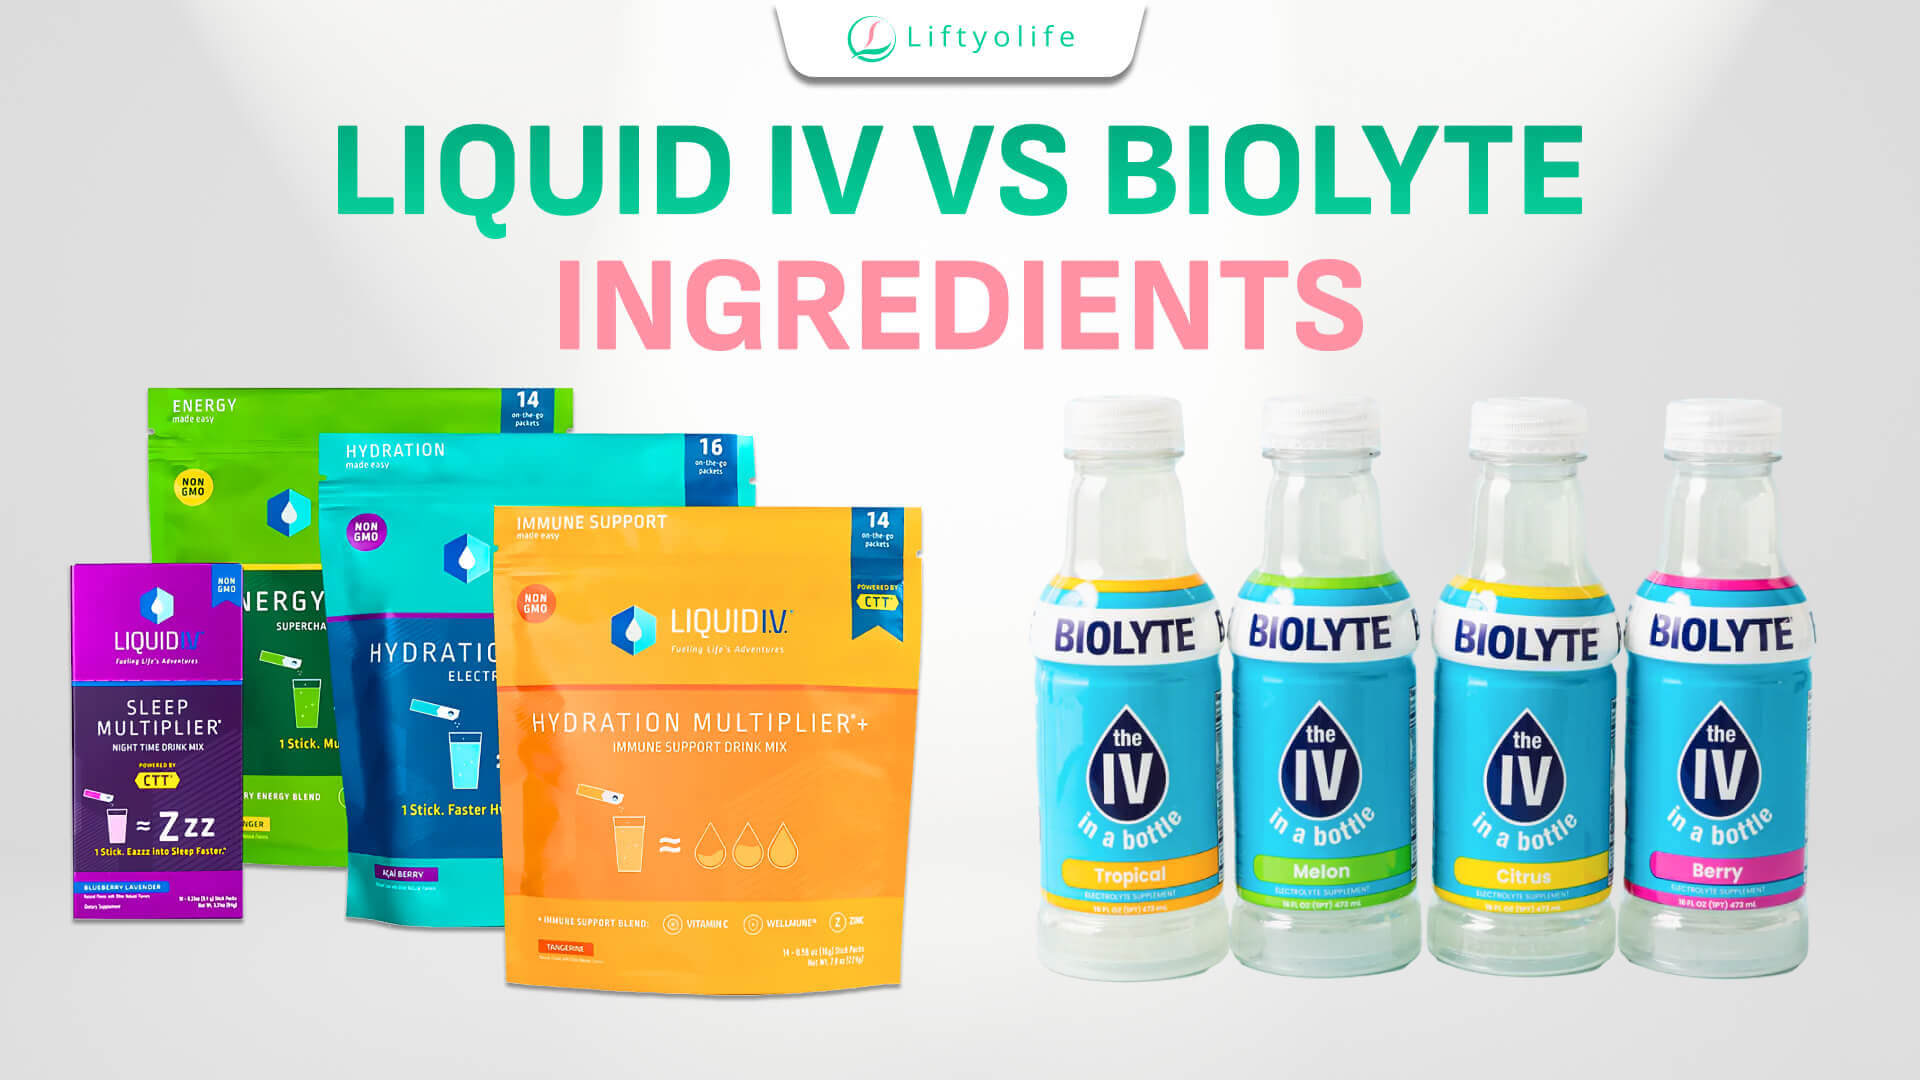 Liquid IV Vs Biolyte: The Ingredients